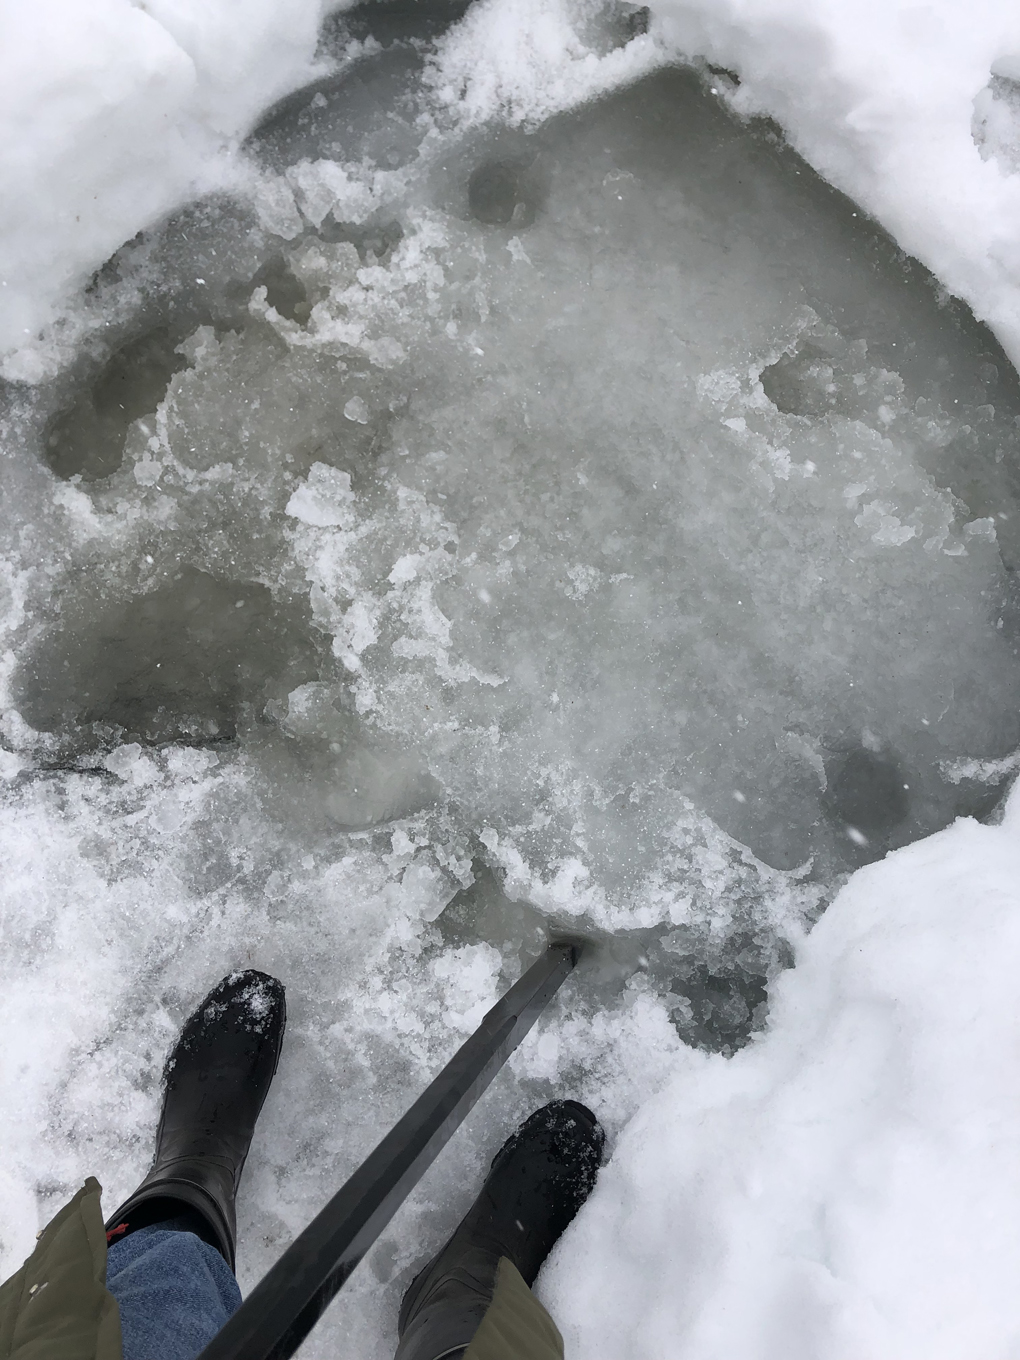 Slushy ice and wellies